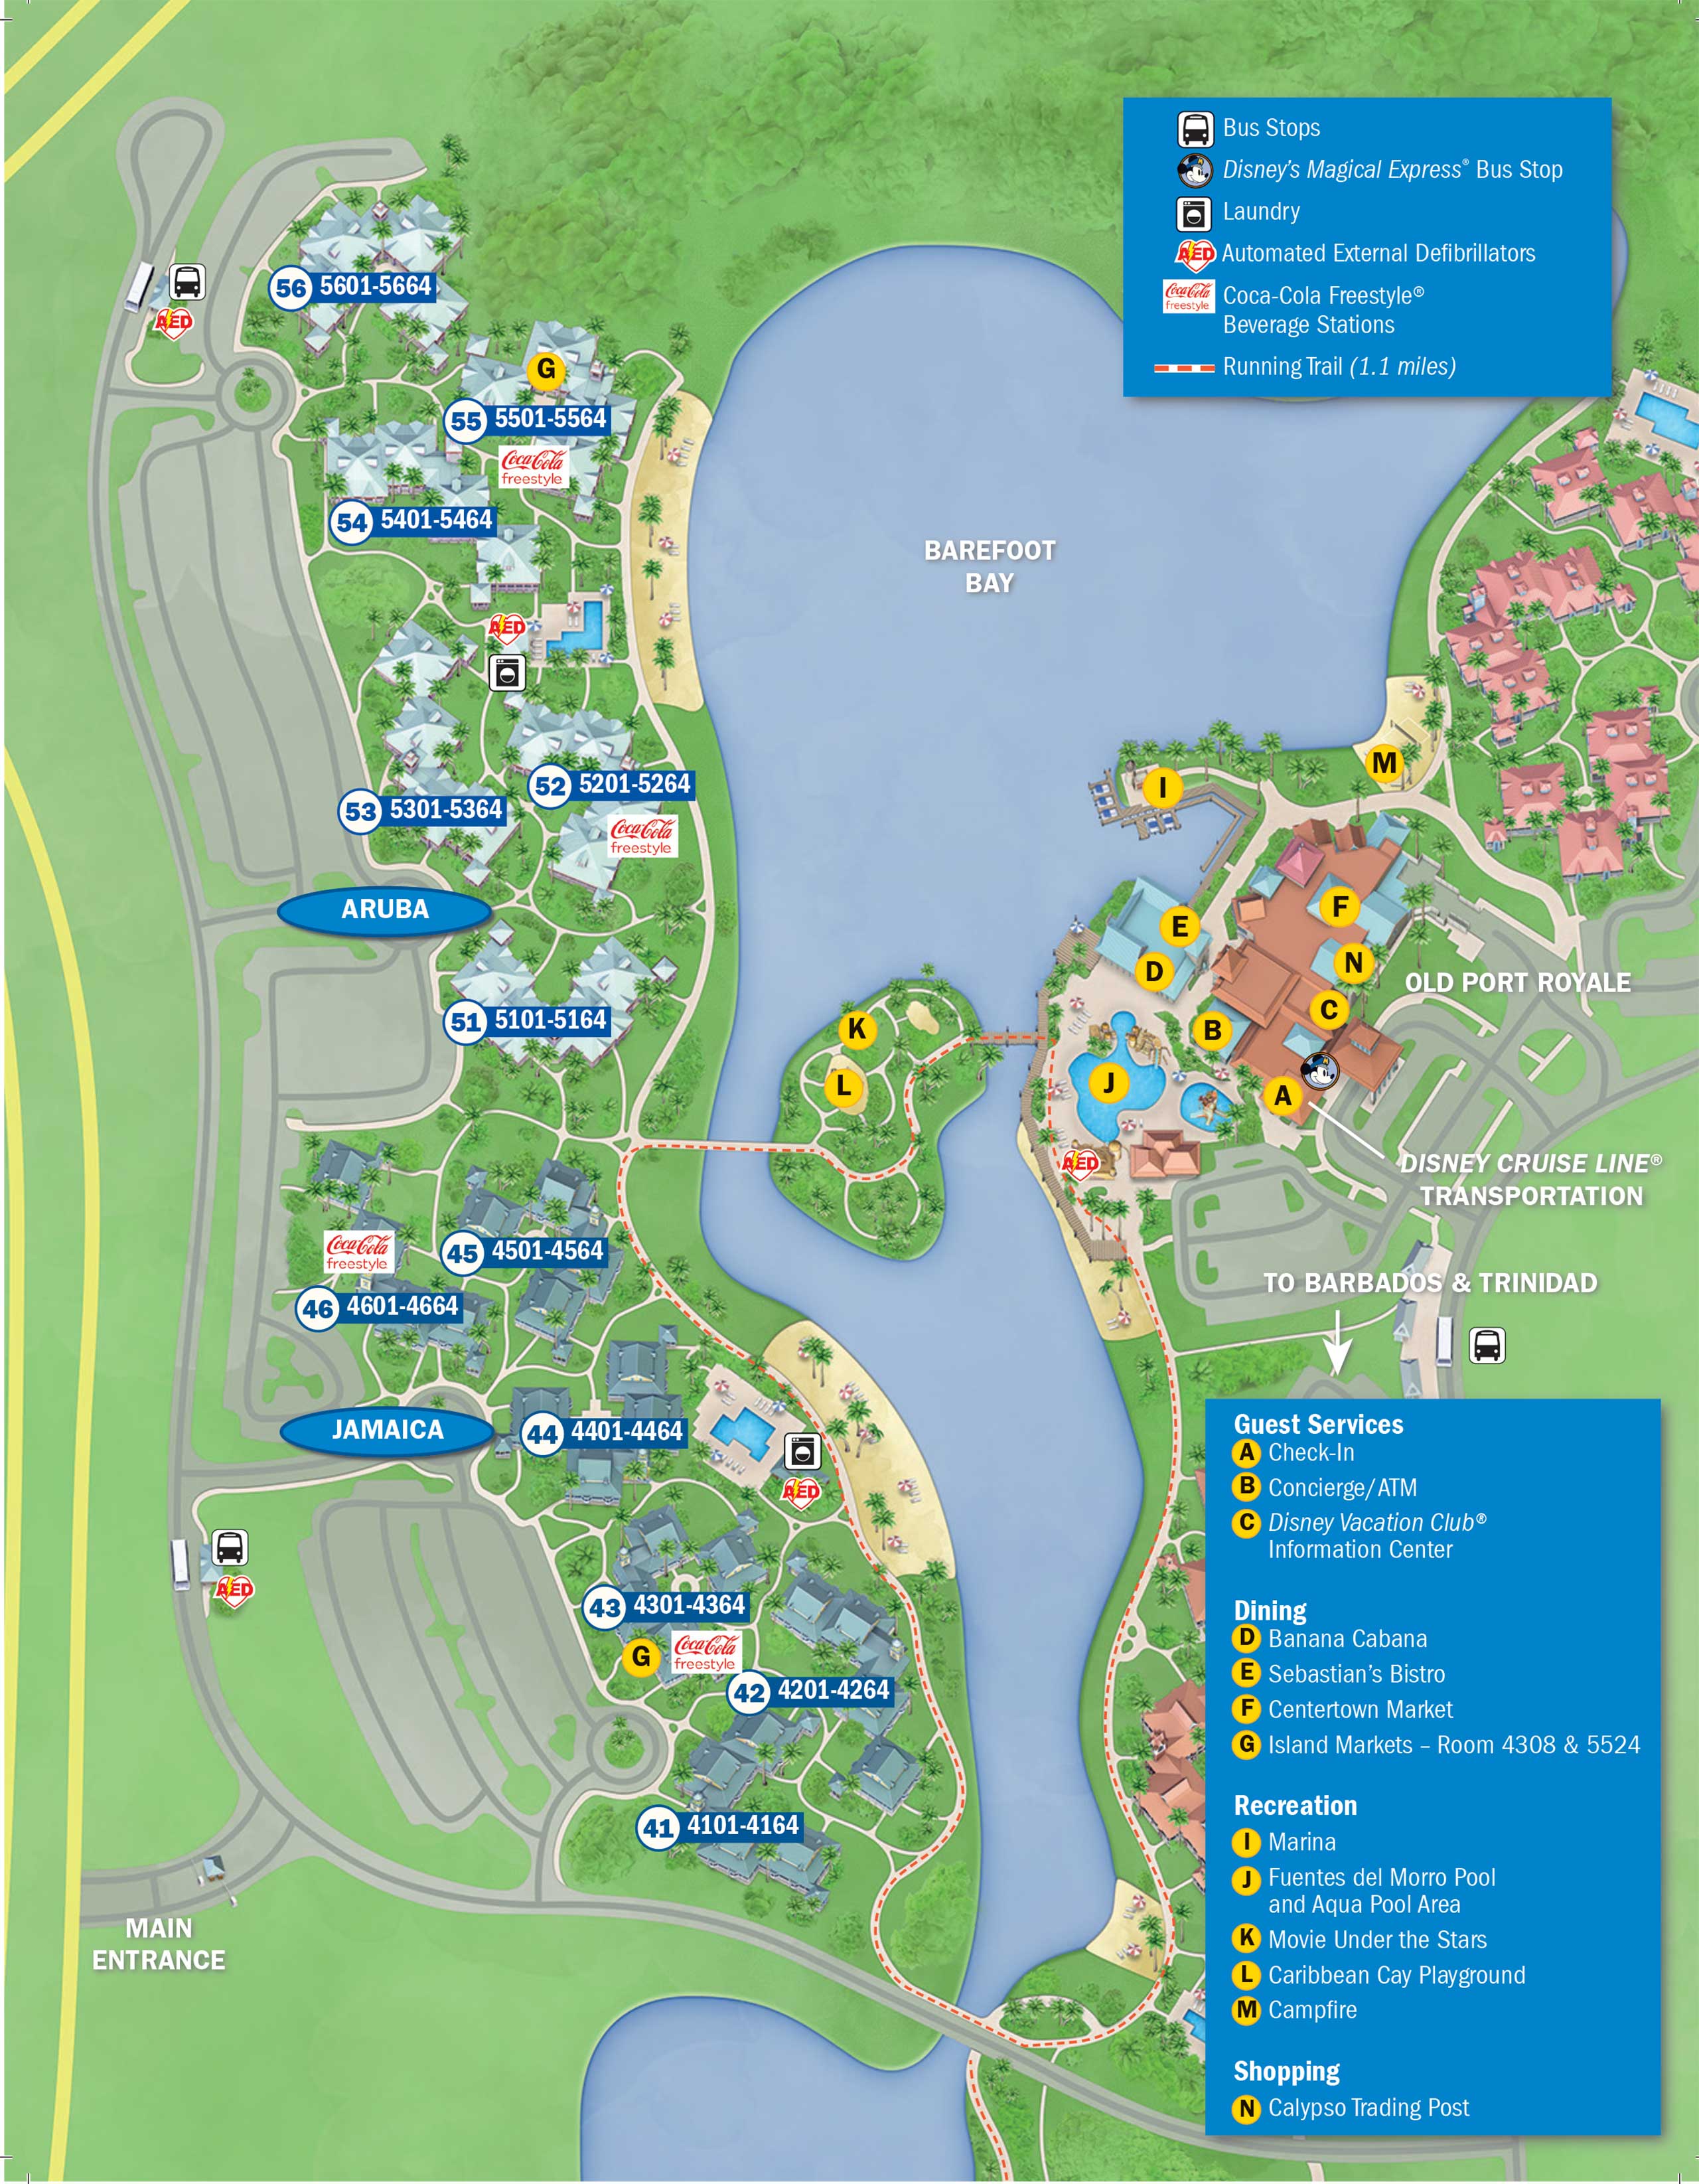 PHOTOS New guide map for Disney's Caribbean Beach Resort